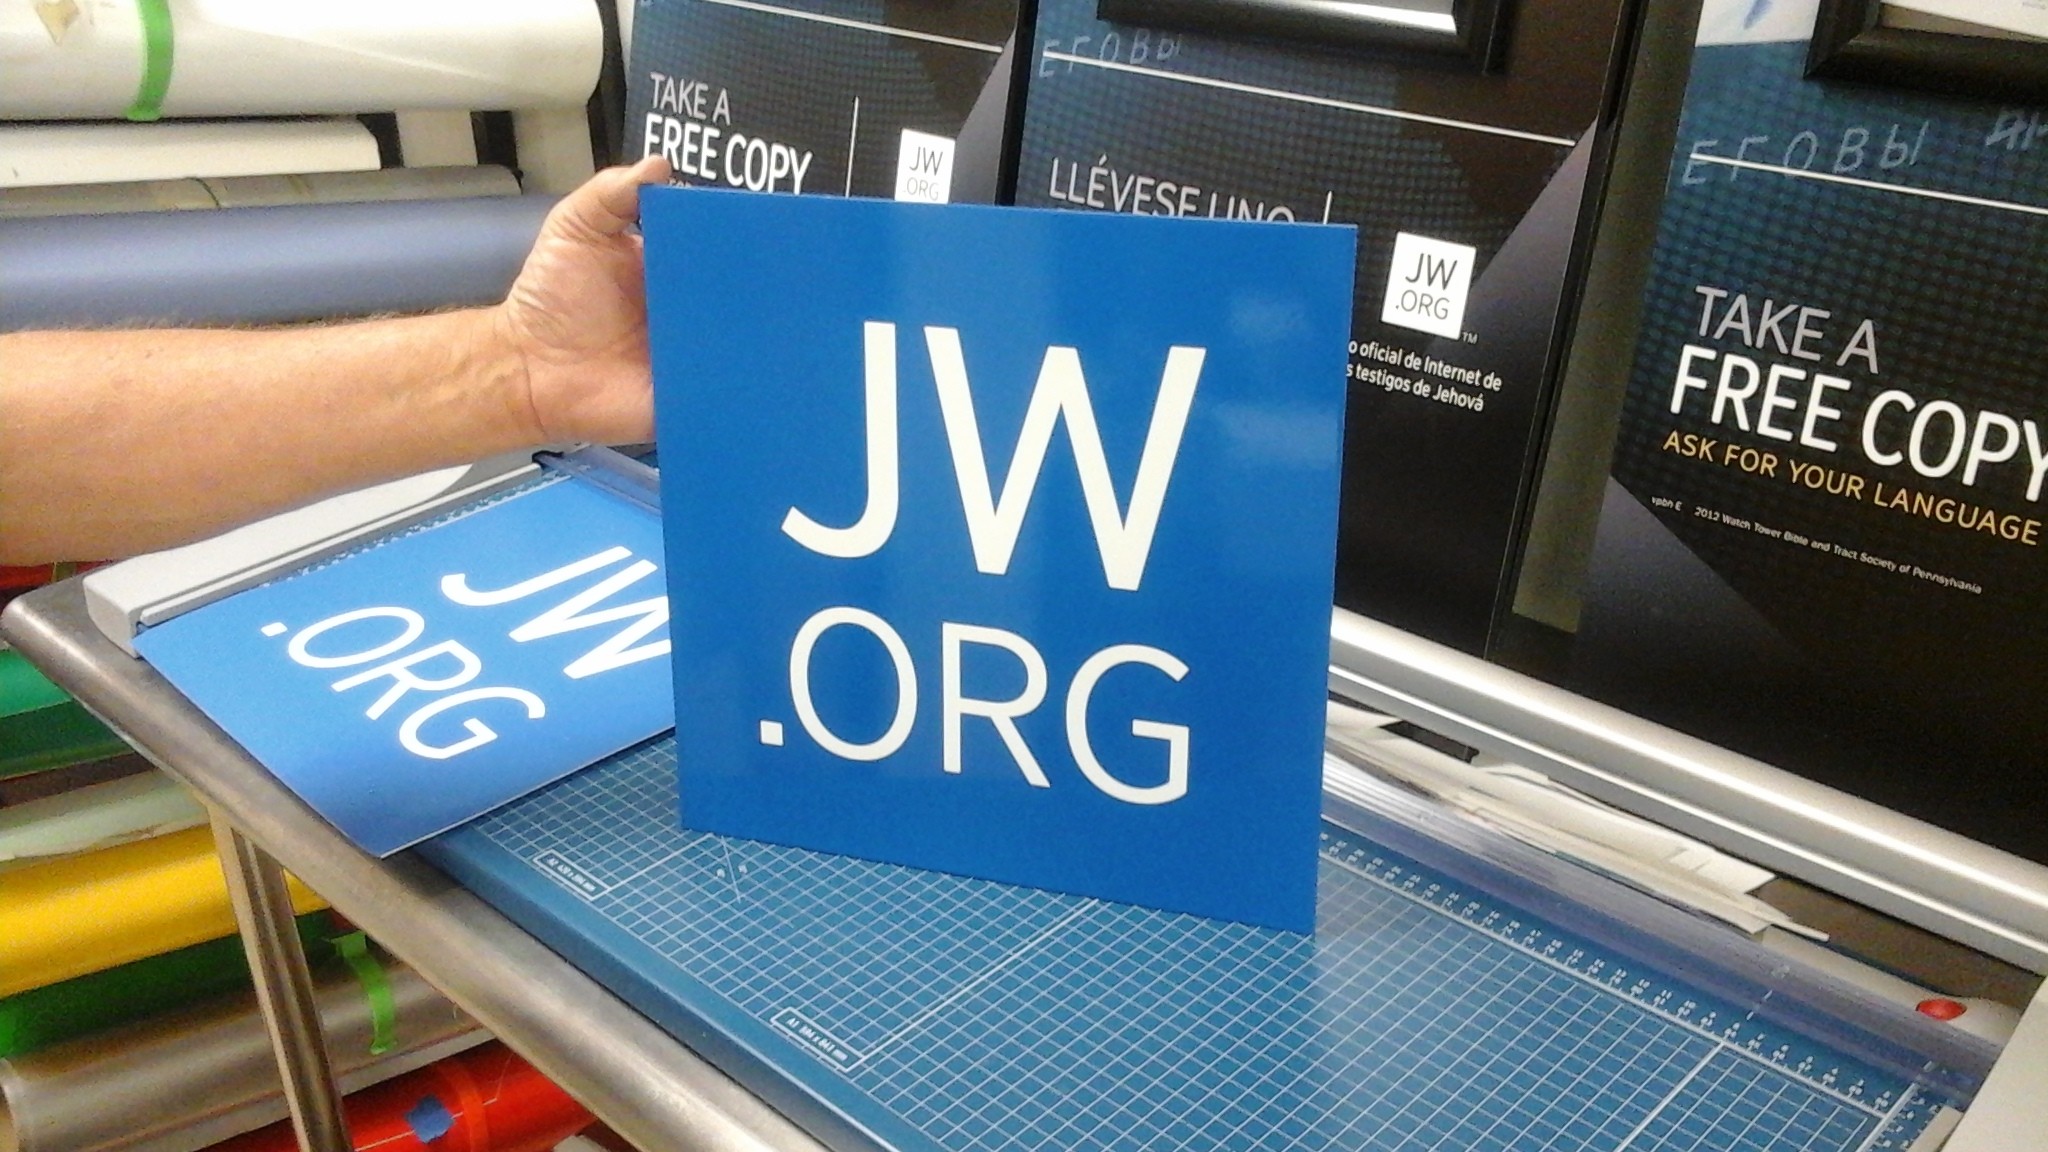 Jw.org signs